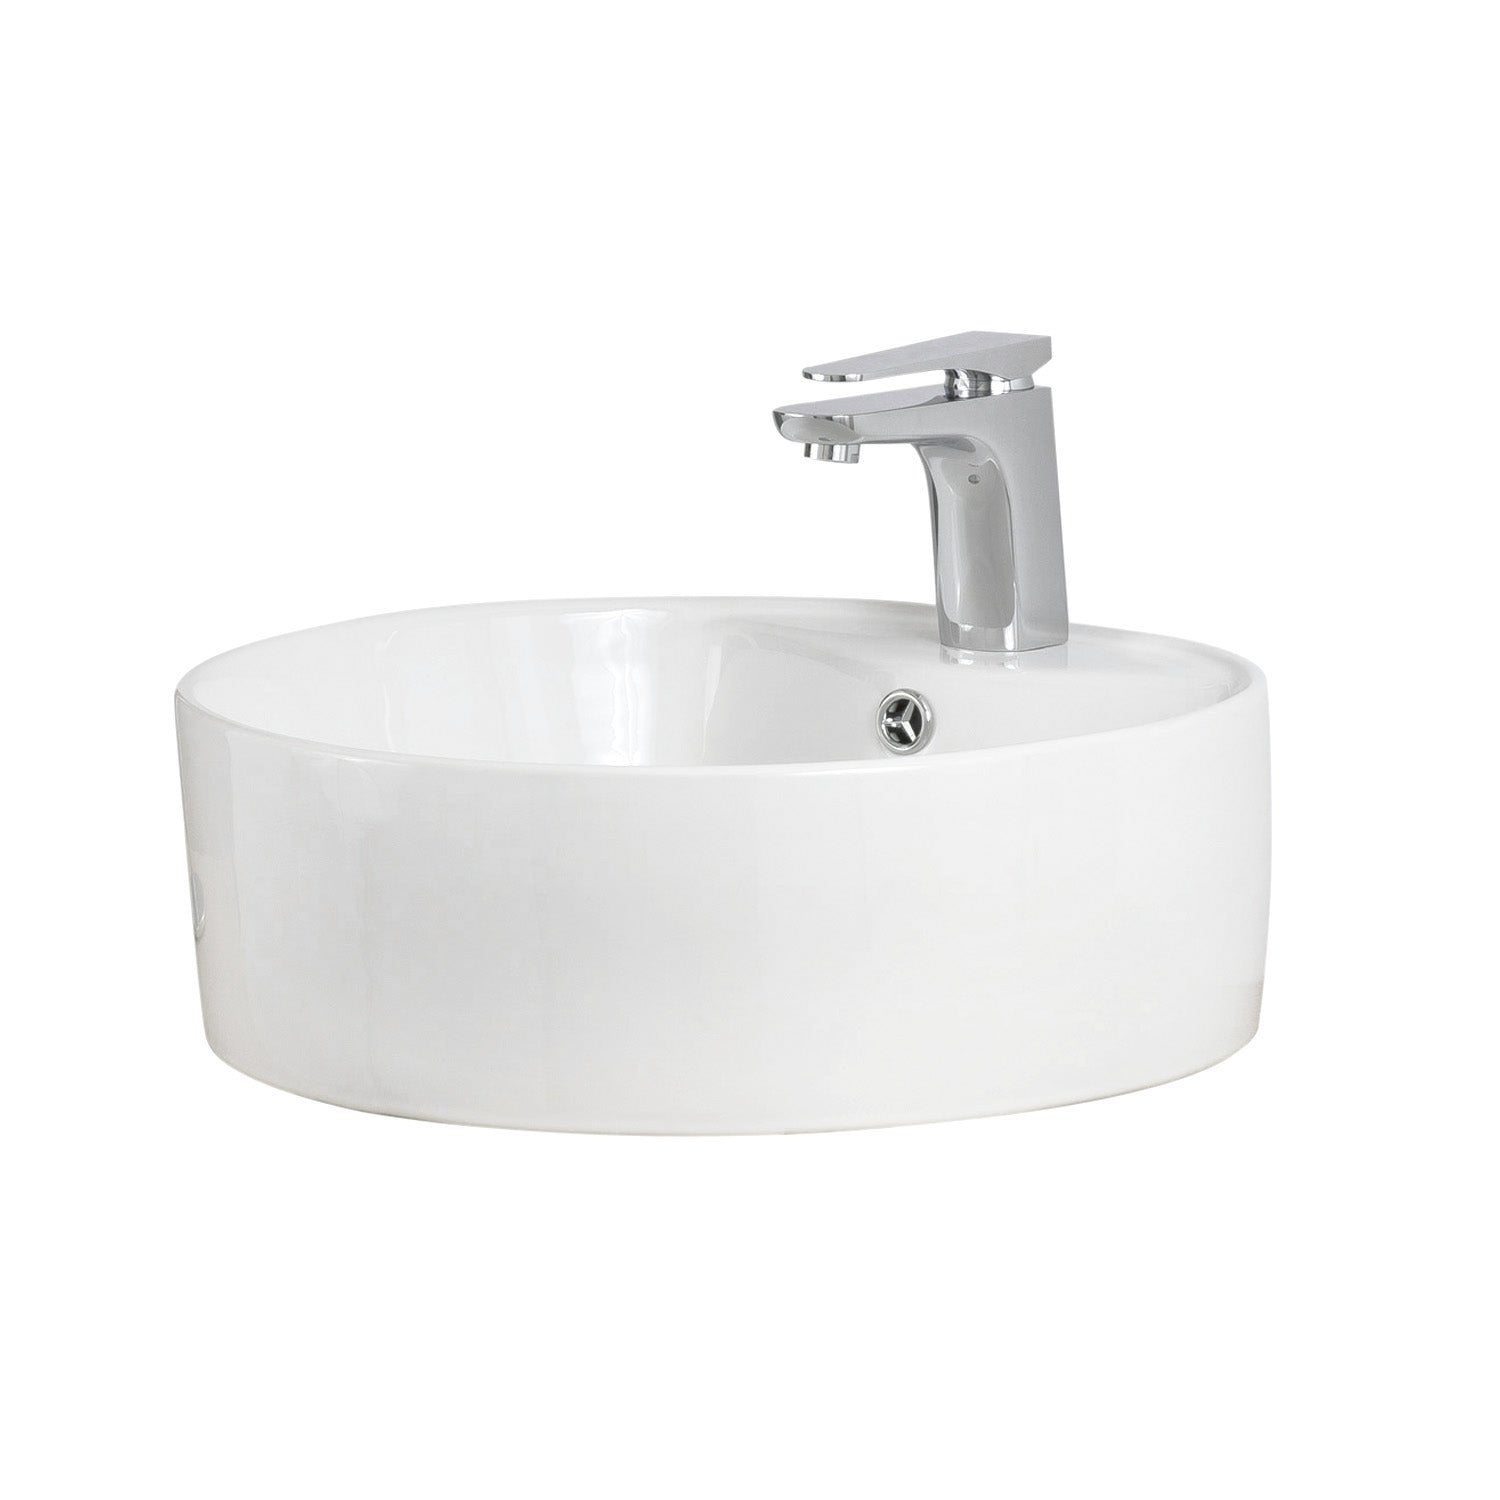 DAX Ceramic Round Single Bowl Bathroom Vessel Sink, White Finish, Ø 1-7/8" x D 6" Inches (BSN-222A)